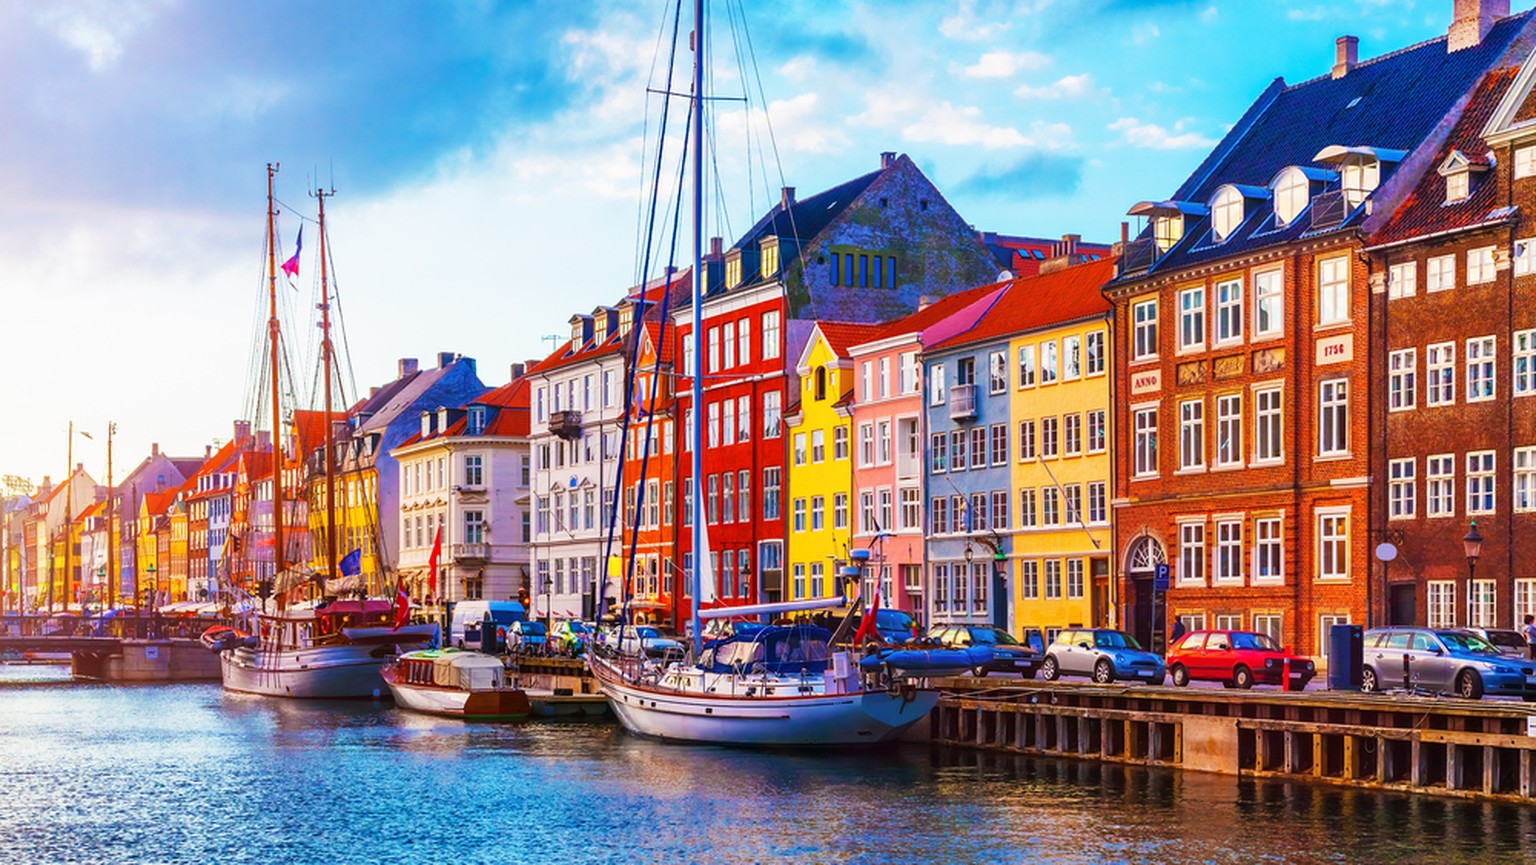 Copenhagen, Kopenhagen, Dänemark, Denmark, Shutterstock, city old travel